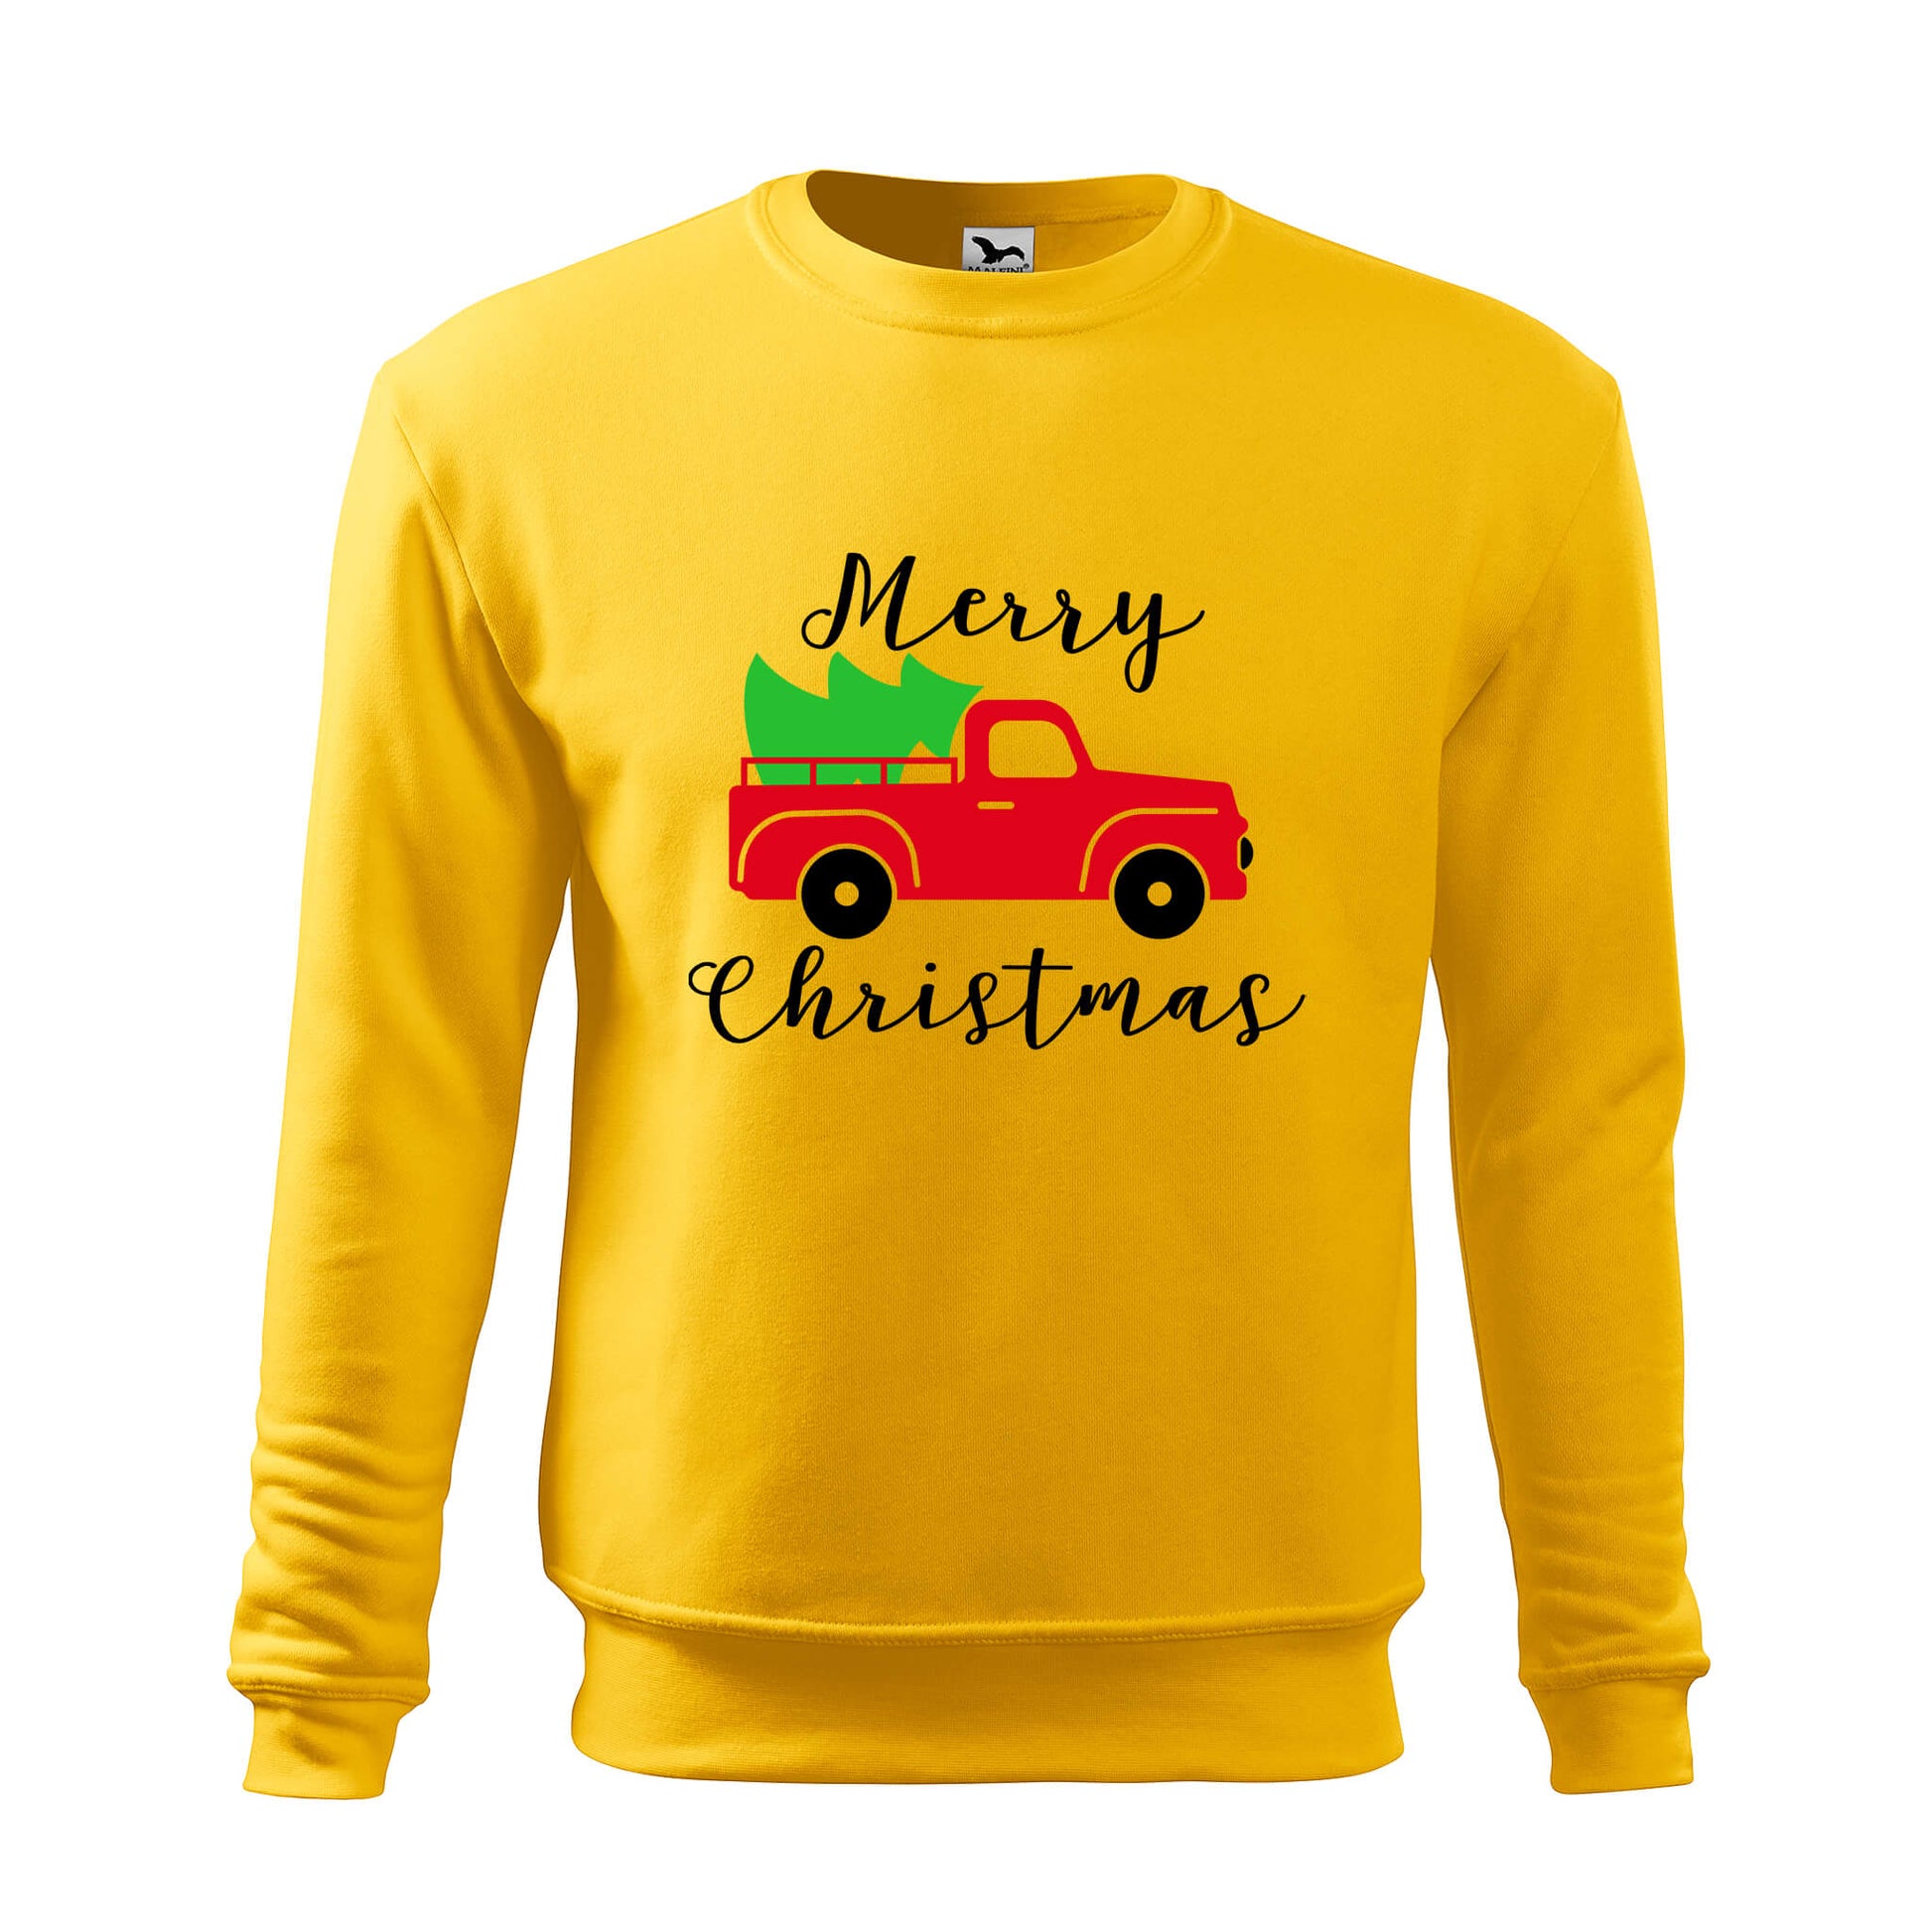 Merry christmas with truck sweatshirt - rvdesignprint